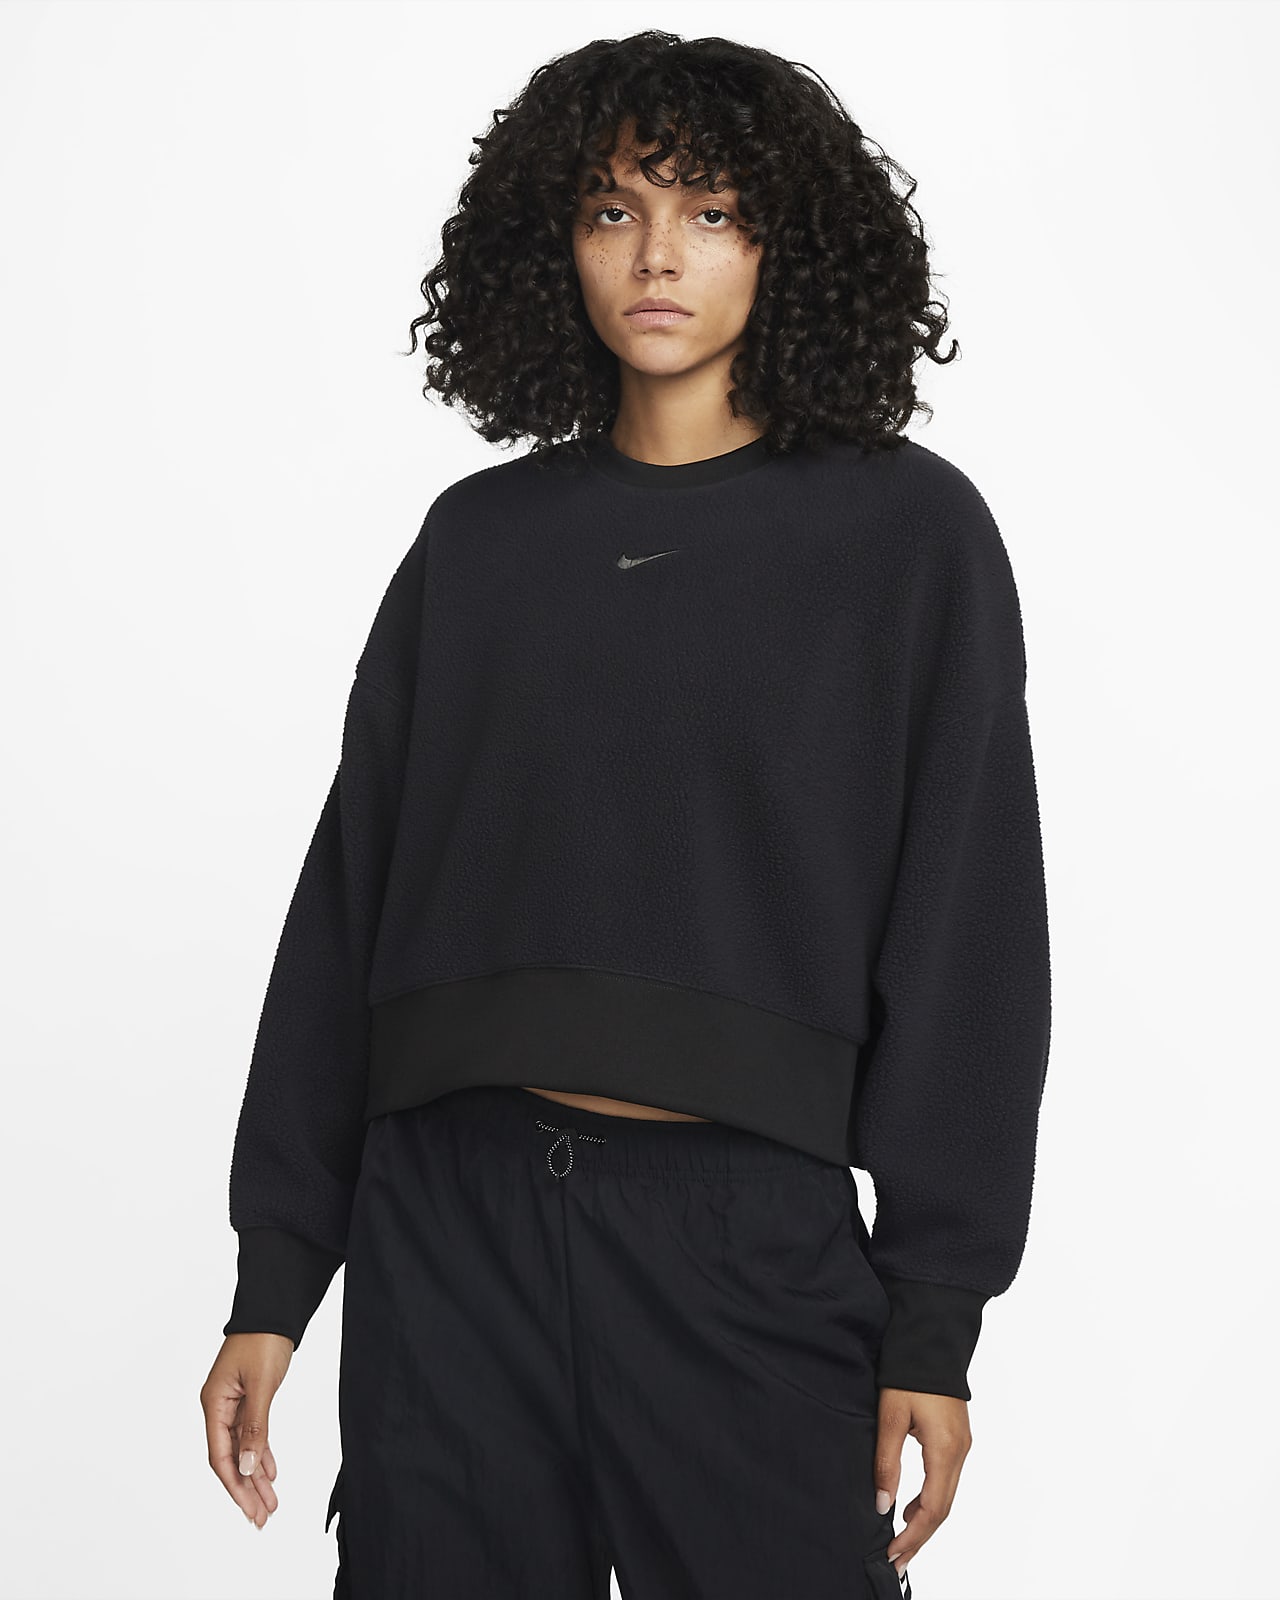 Nike Plush Women's Oversized Crop Sweatshirt. .com